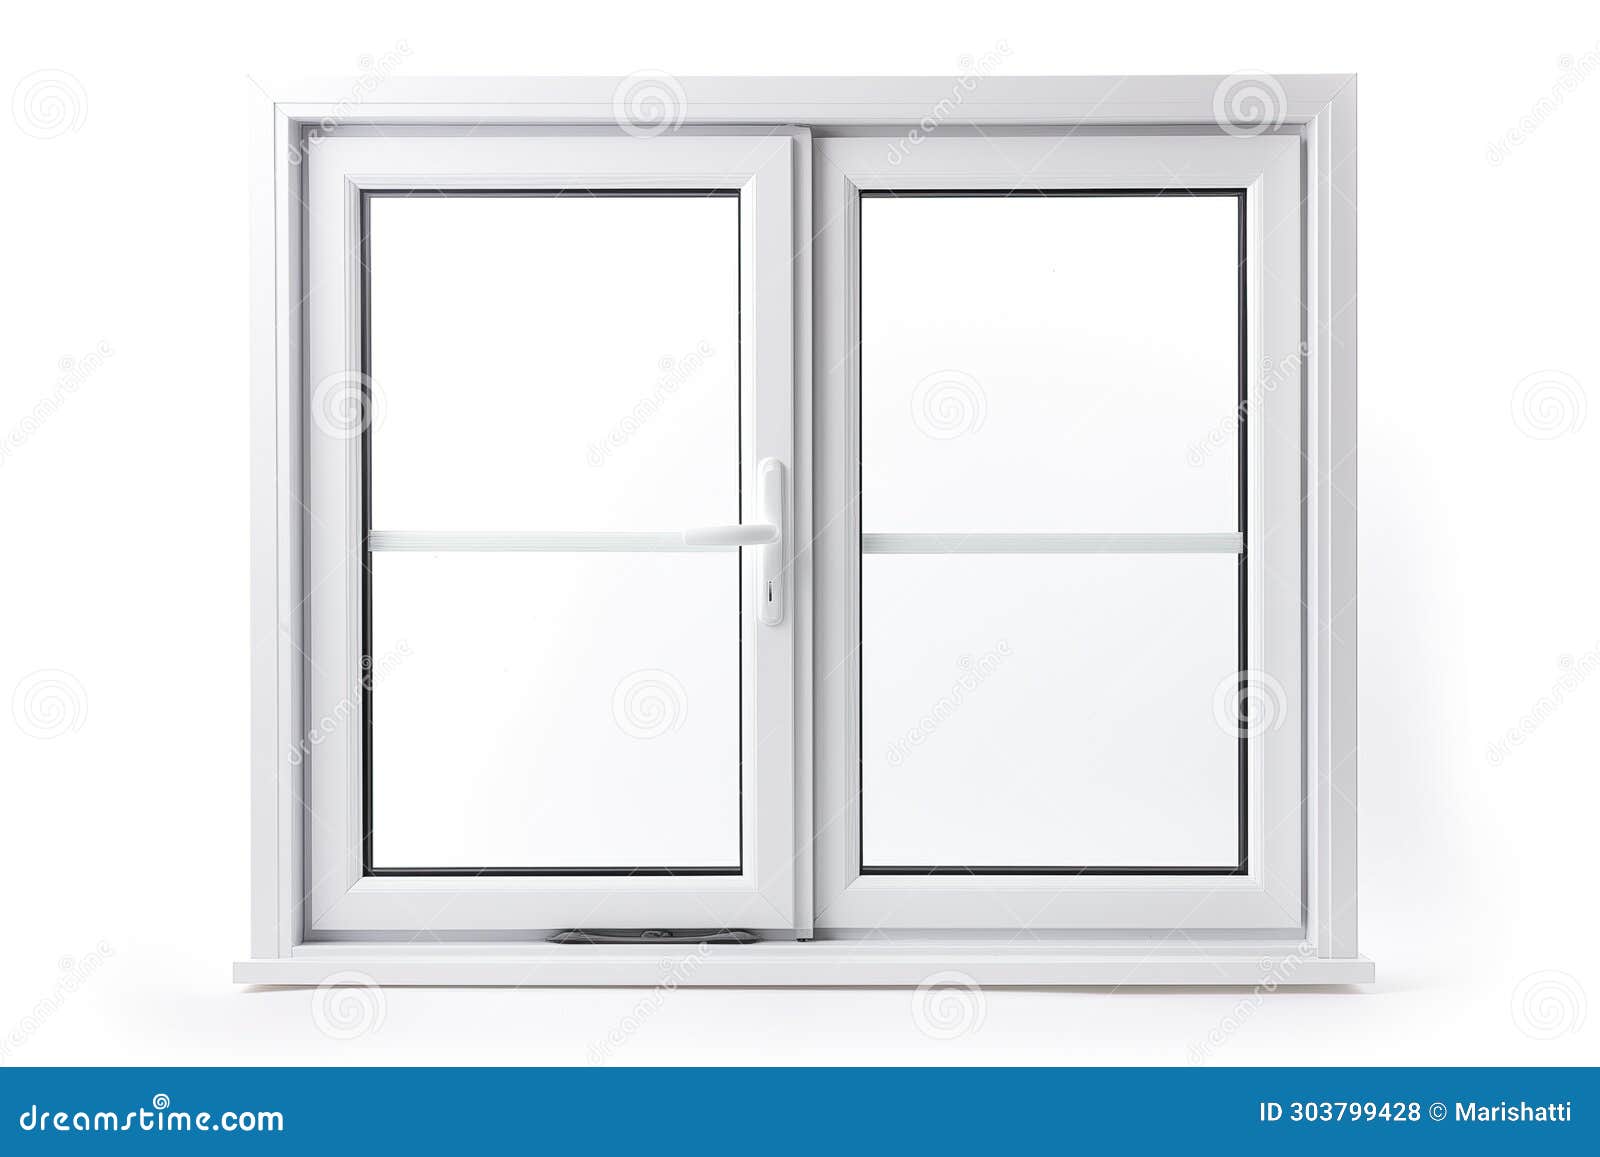 modern white window frame  on white background